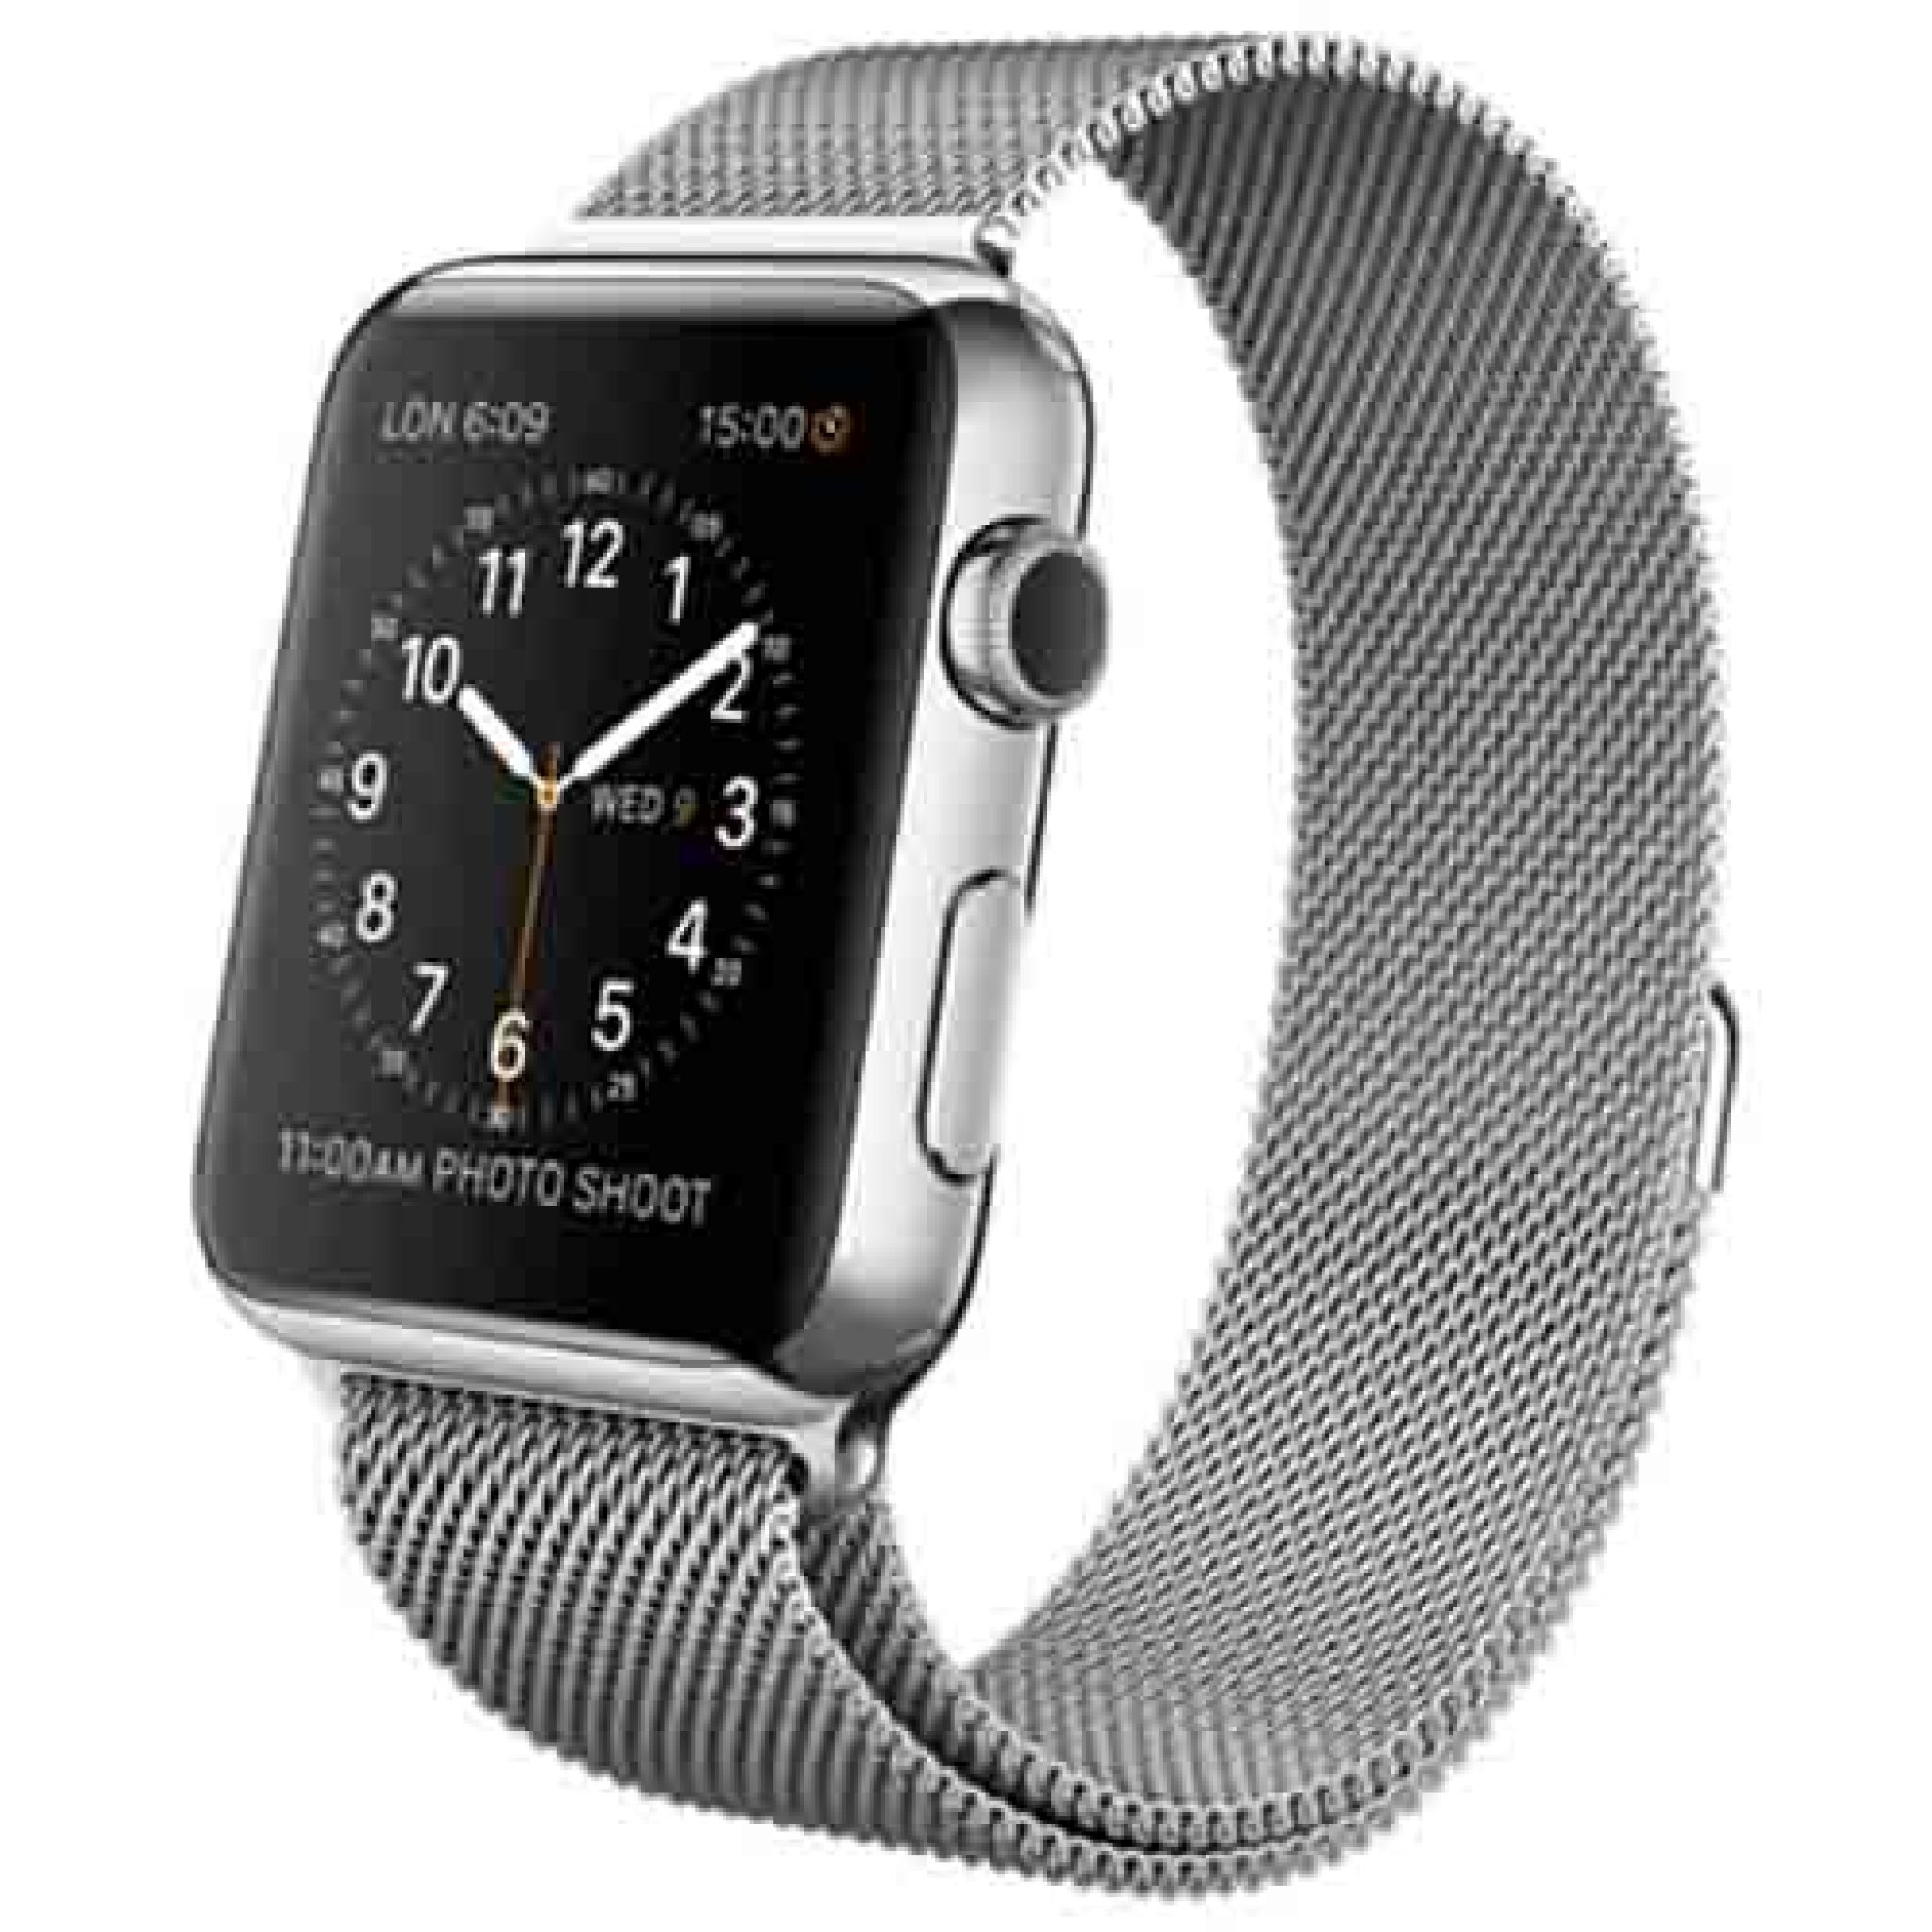 Apple Watch - アップルウォッチ ステンレスモデル silver Apple Watch